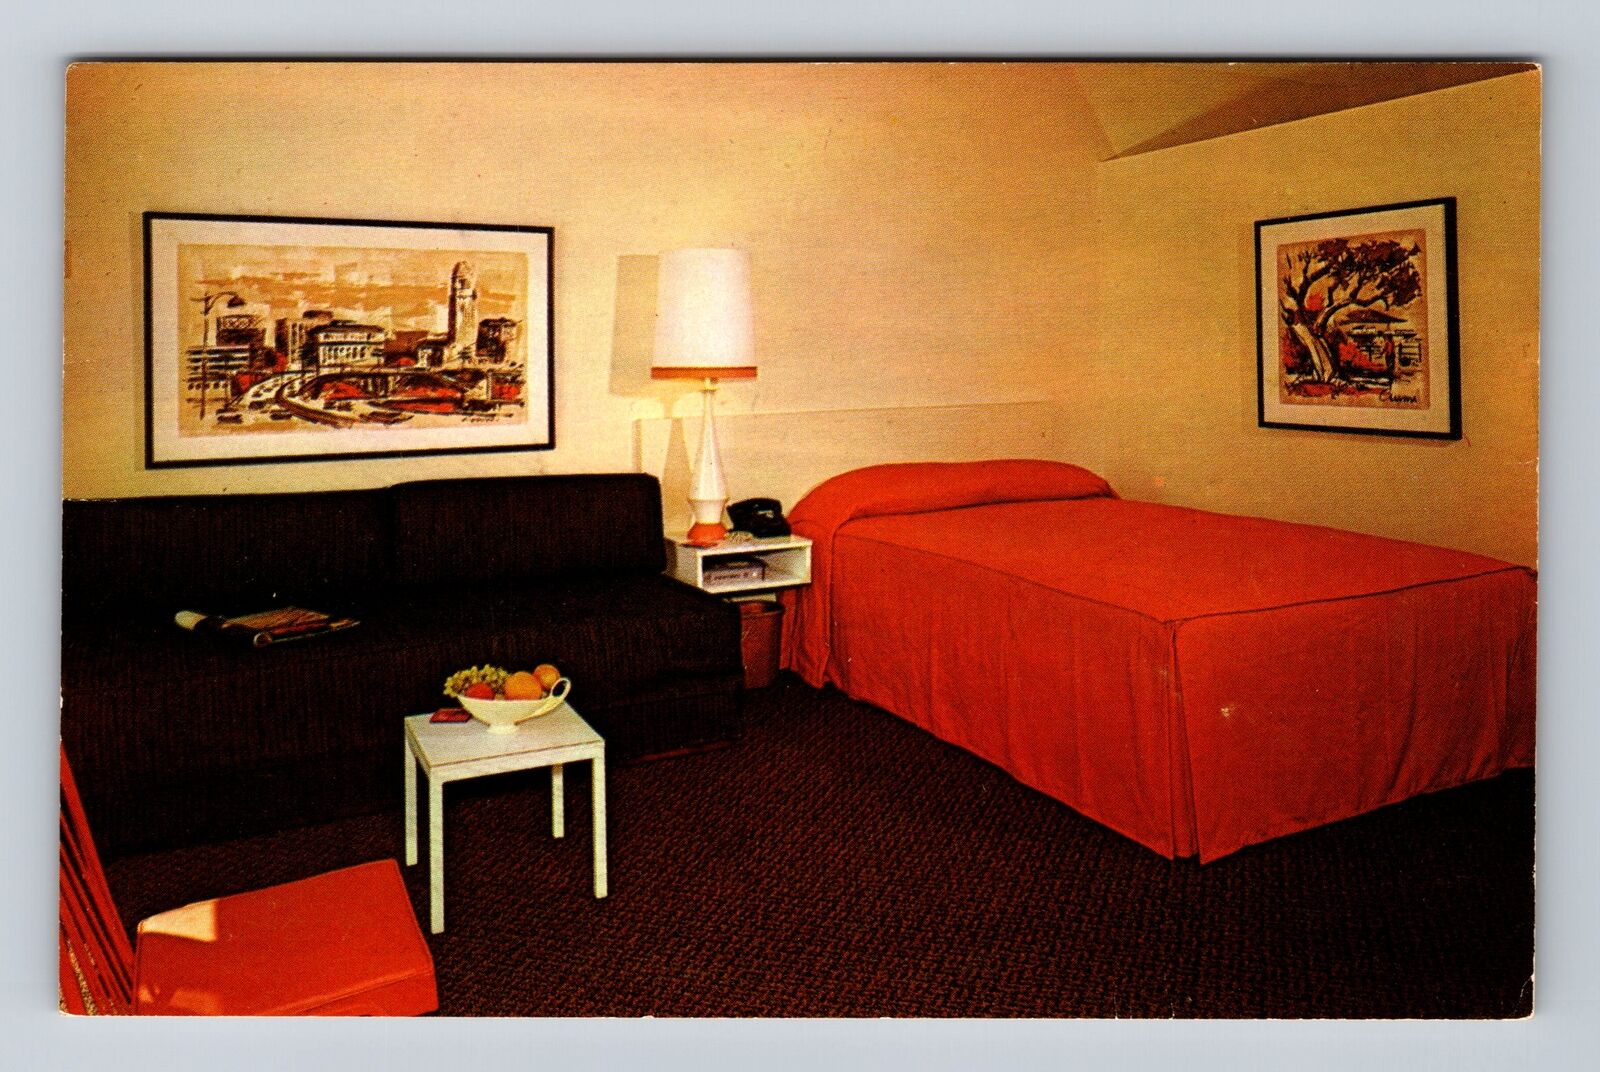 Tucson AZ-Arizona, Imperial 400 Motels, Advertising, Antique Vintage Postcard